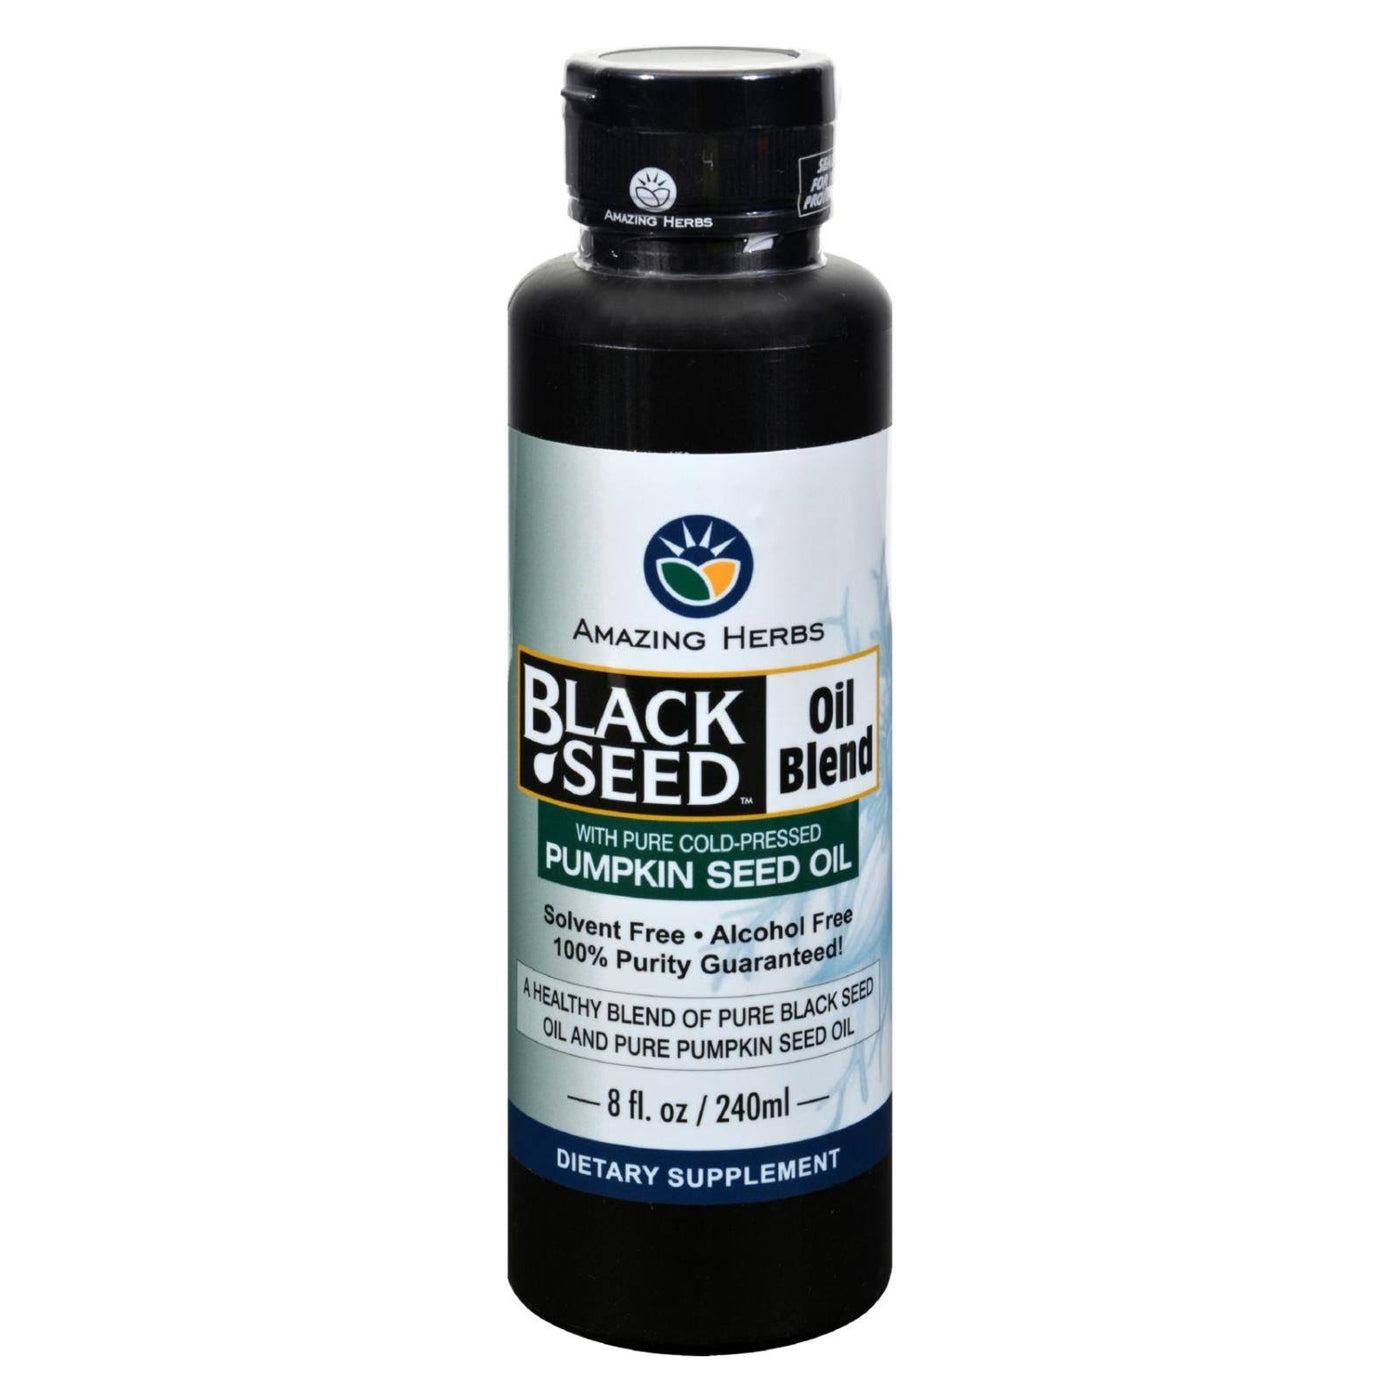 Amazing Herbs - Black Seed Oil Blend - Styrian Pumpkin Seed - 8 Oz | OnlyNaturals.us